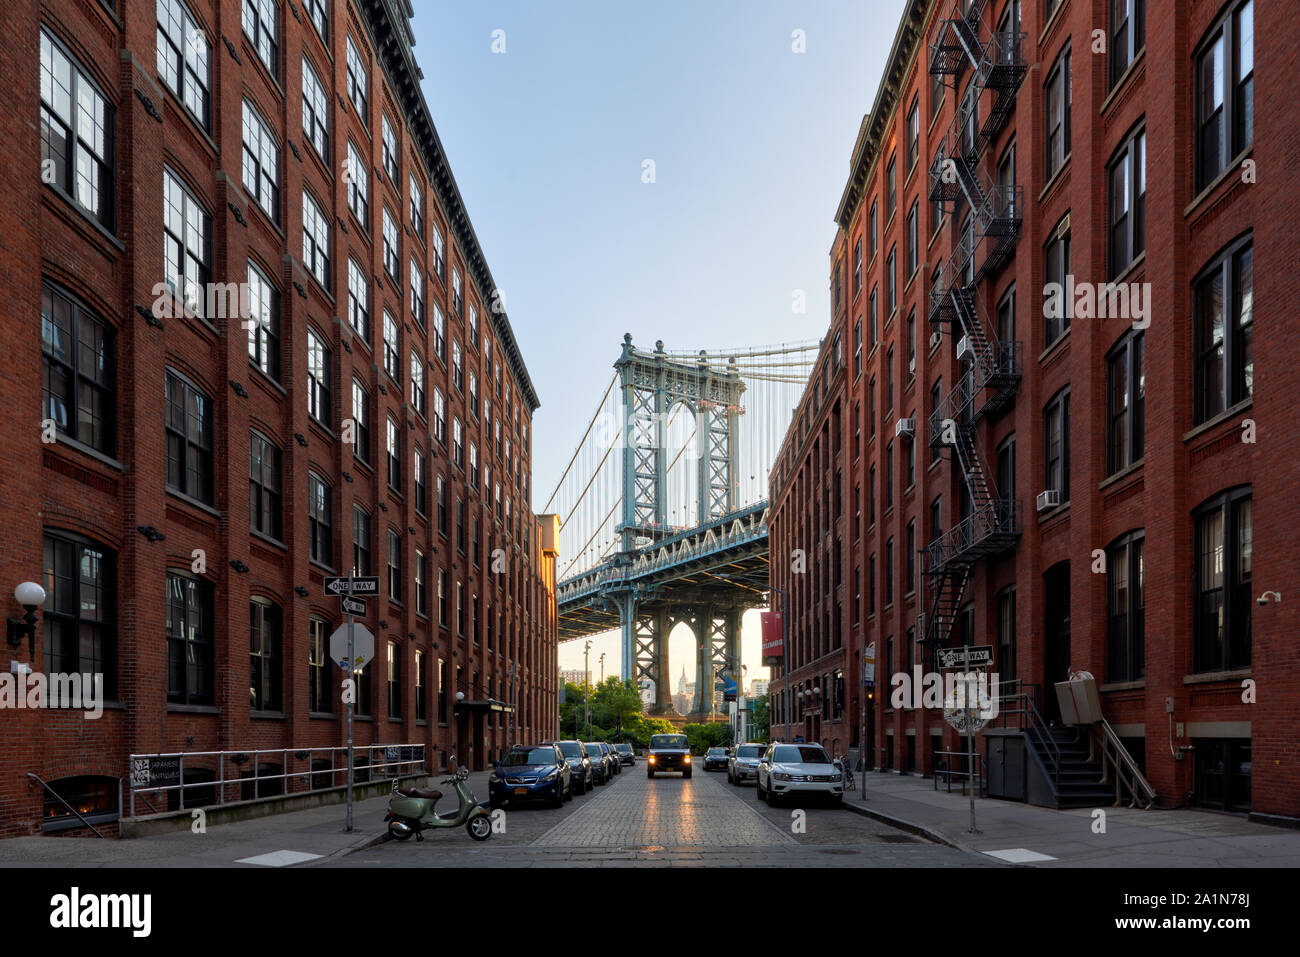 Historic Dumbo district in Brooklyn, NY Stock Photo